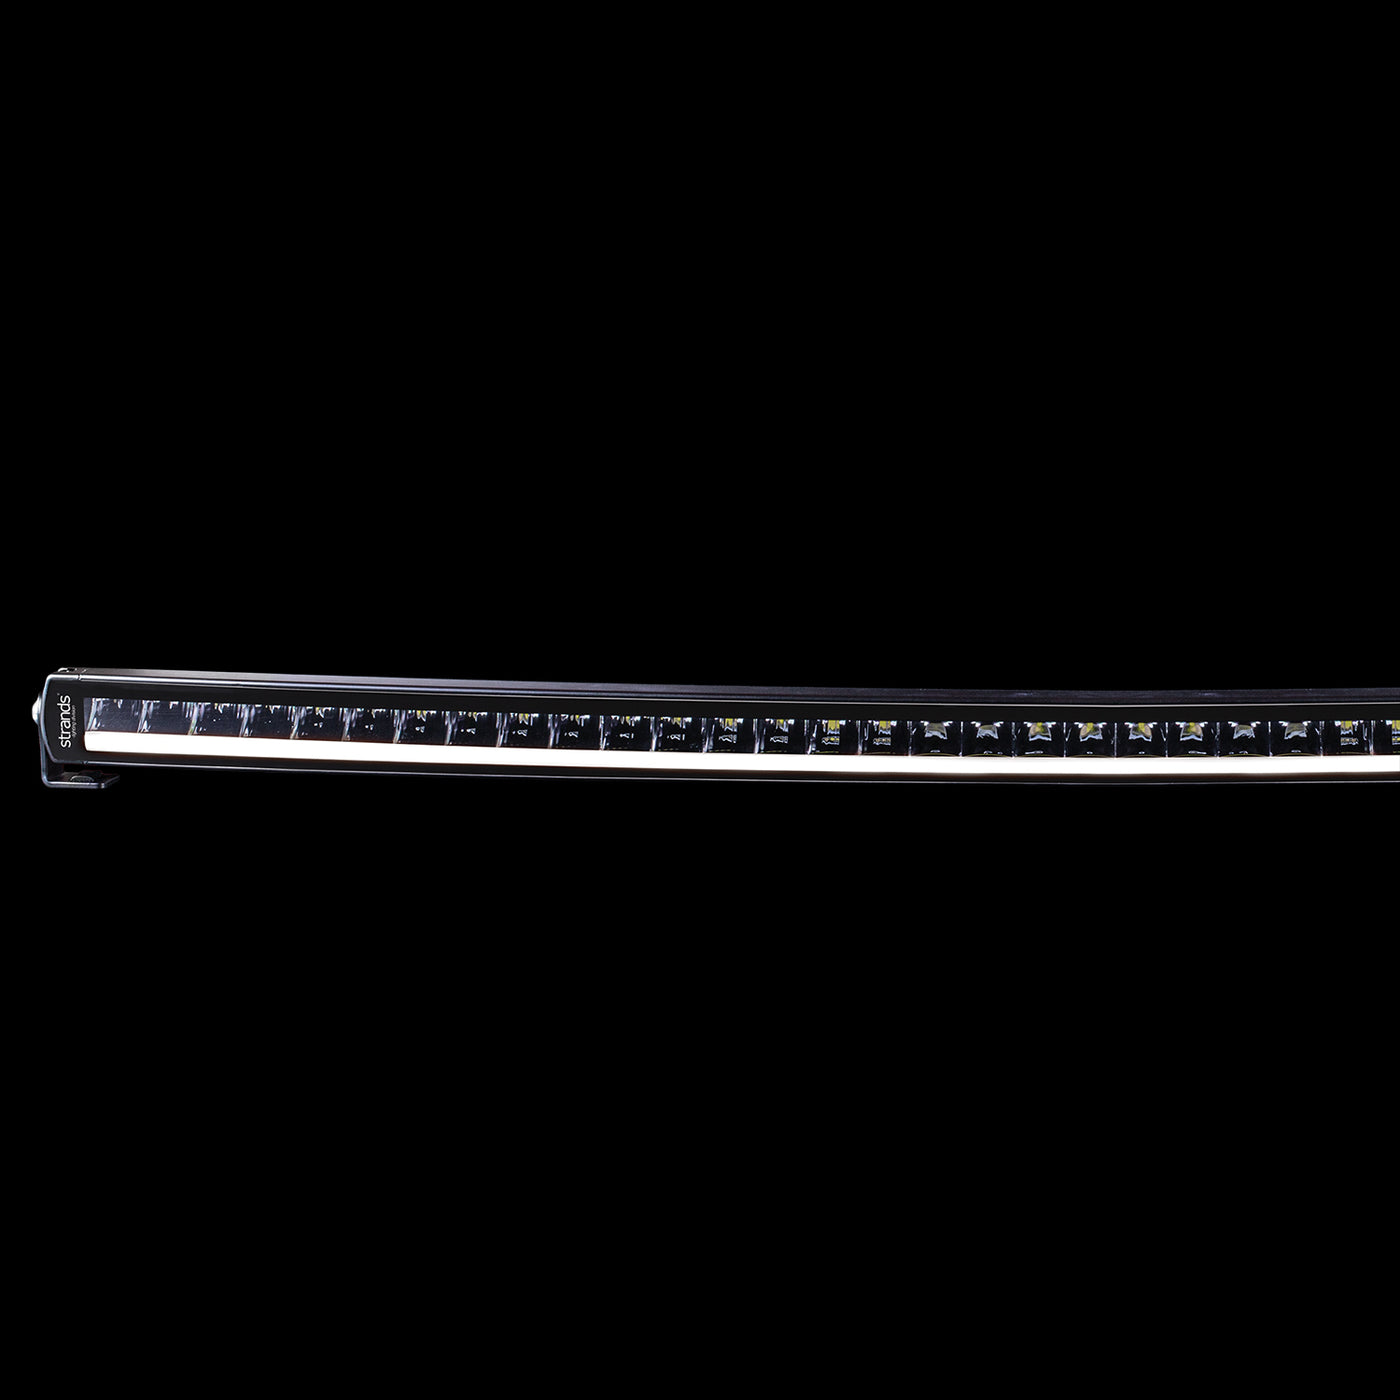 Siberia Single Row Curved  42 inch LED Light Bar